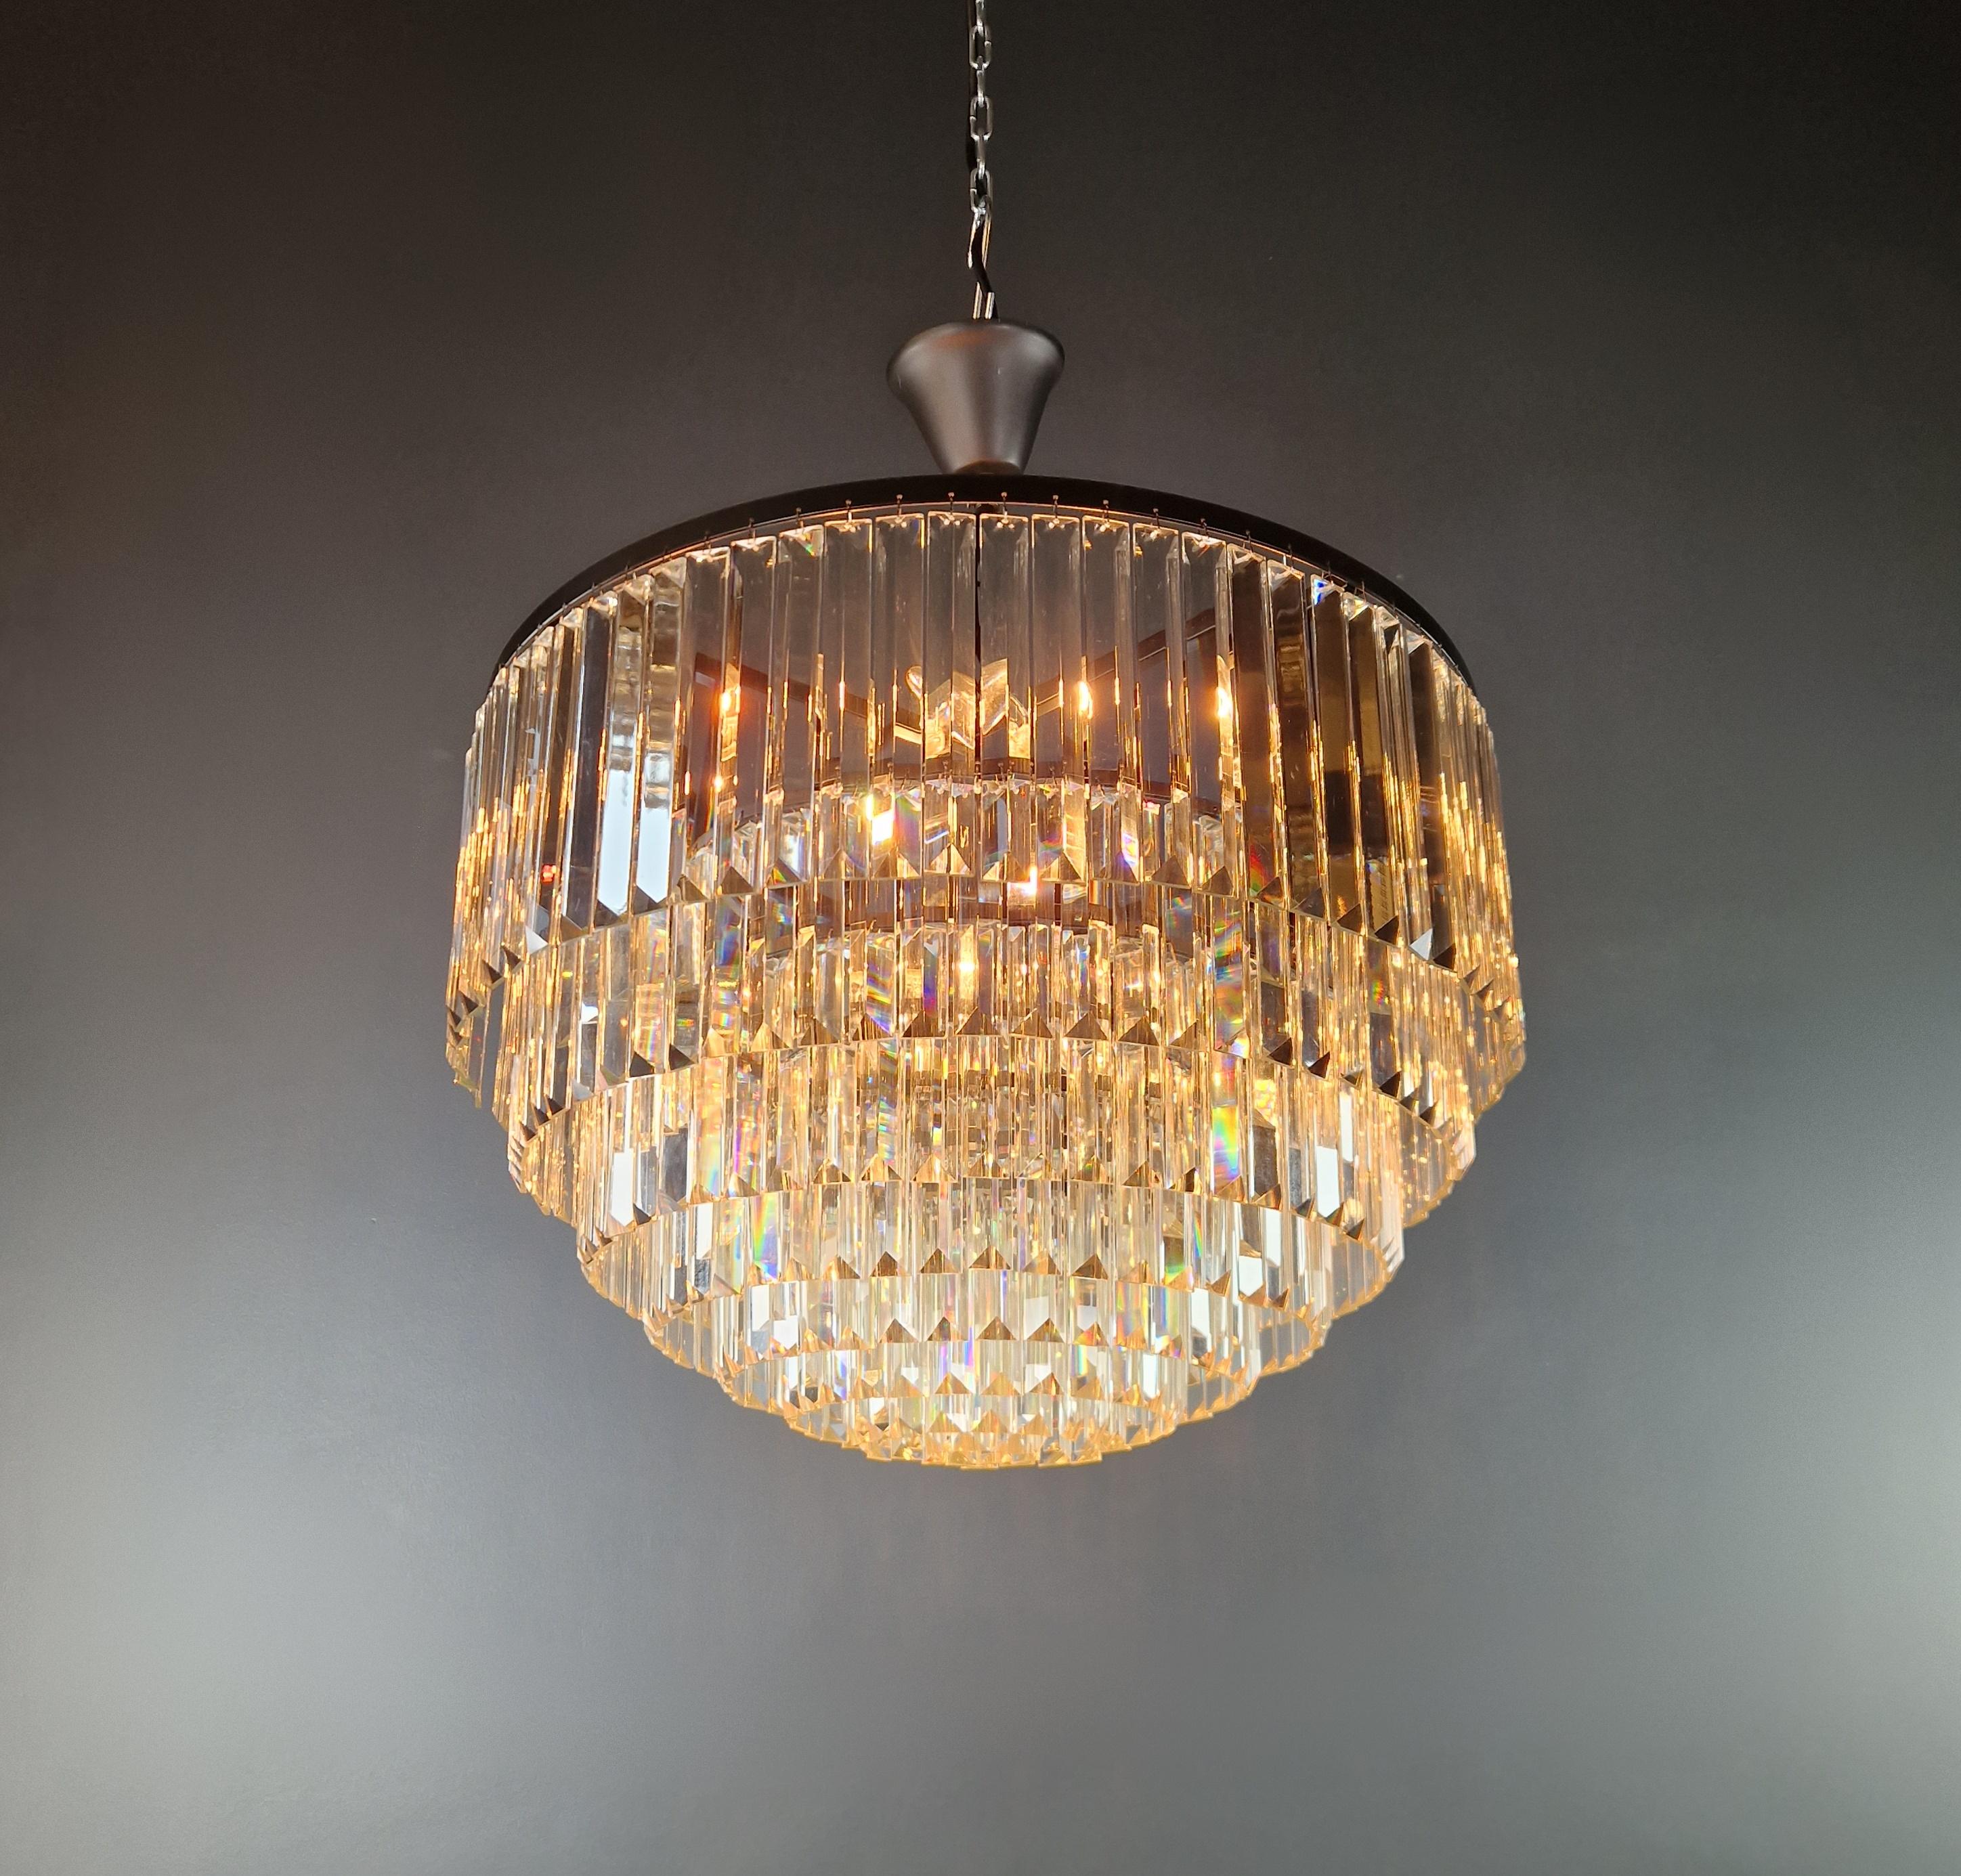 Postmodern Chandelier Crystal Ceiling Lamp Lustre Vintage Art Nouveau In New Condition For Sale In Berlin, DE